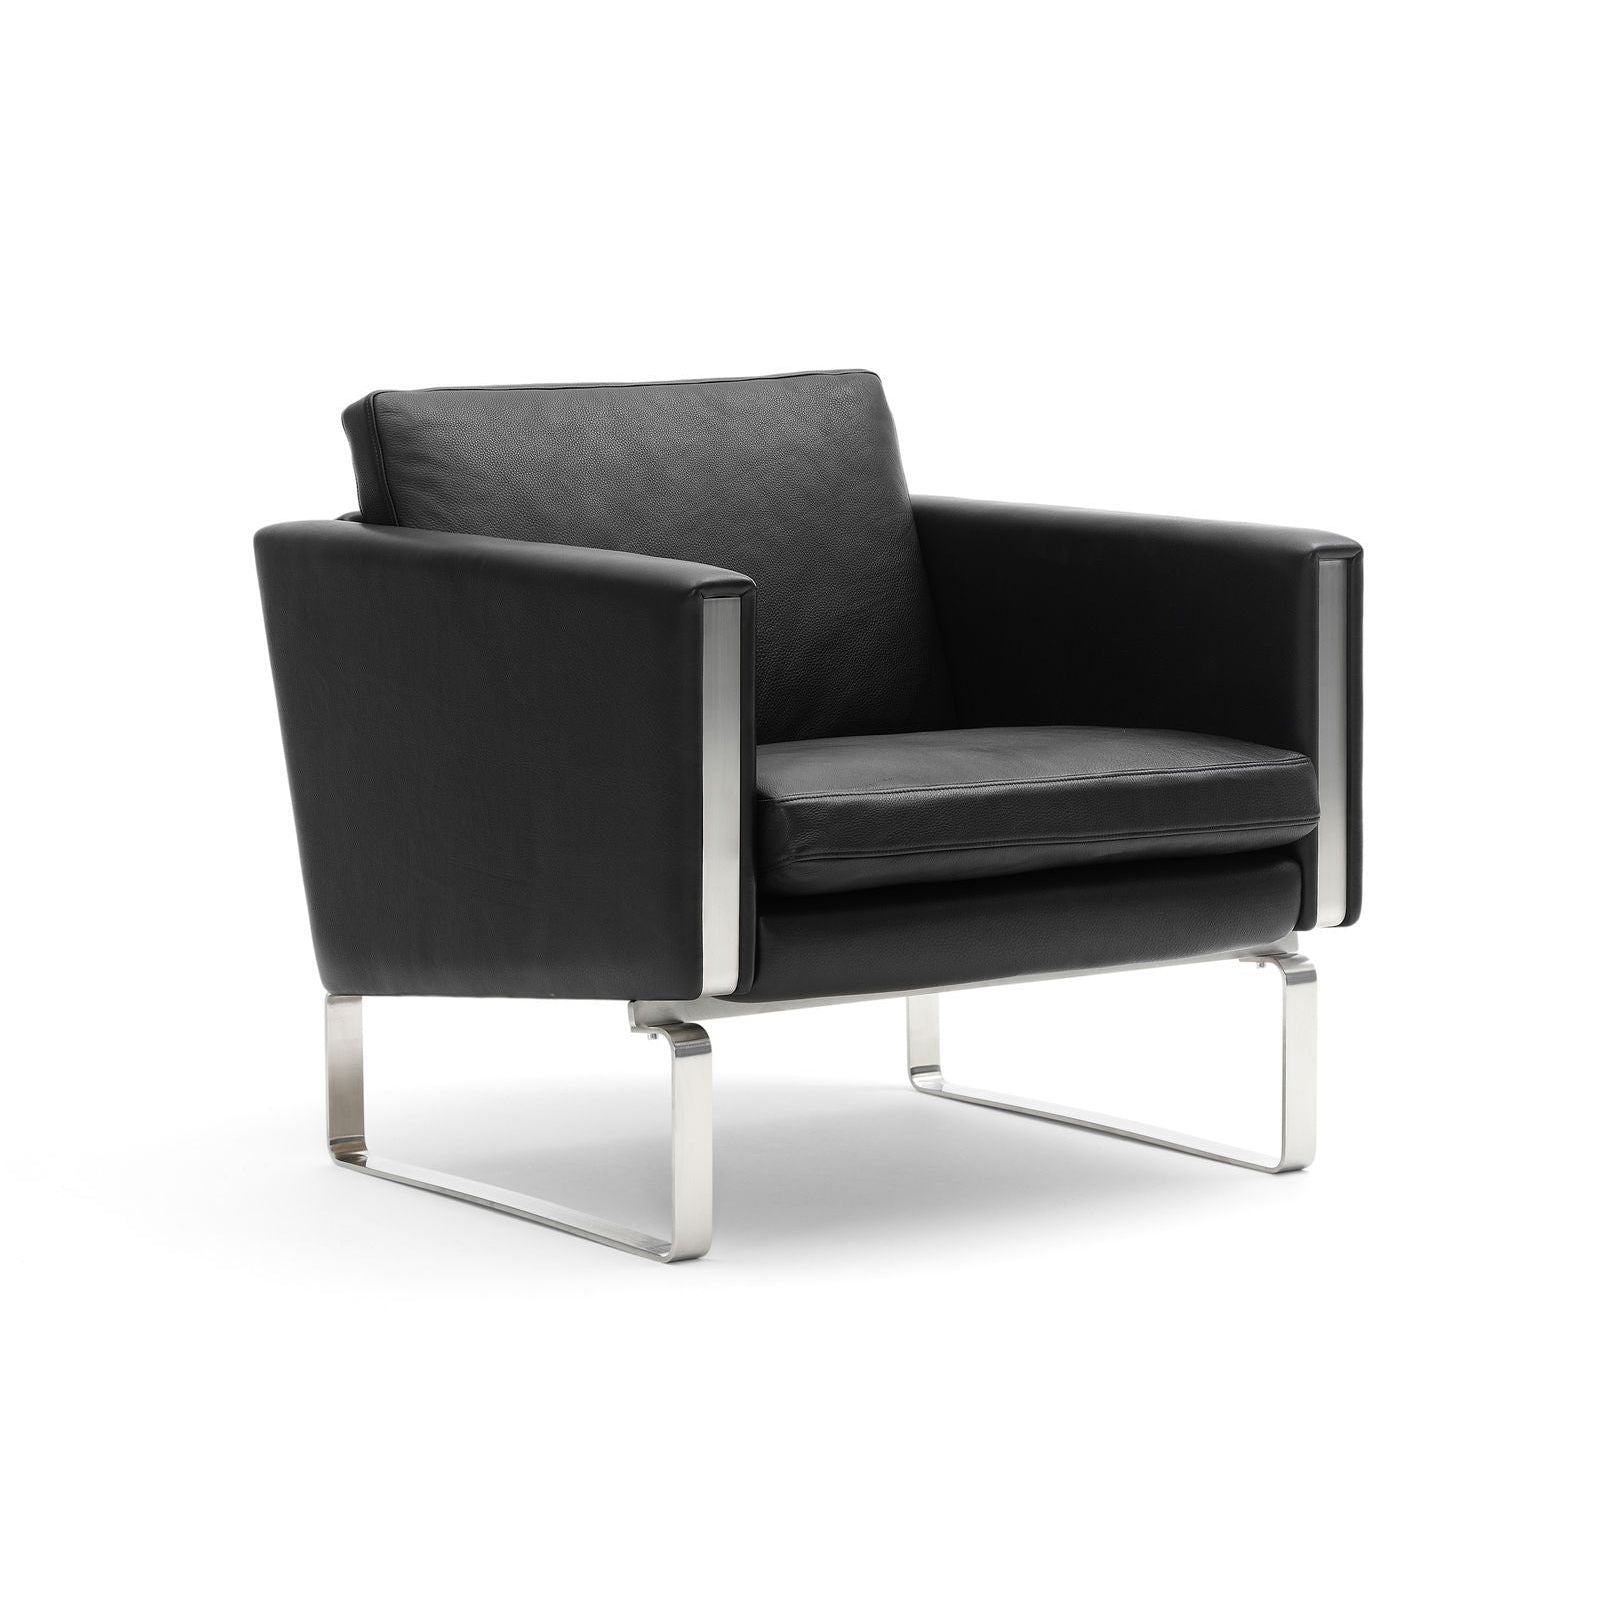 Carl Hansen CH101 sillón de acero inoxidable, cuero negro (Thor 301)